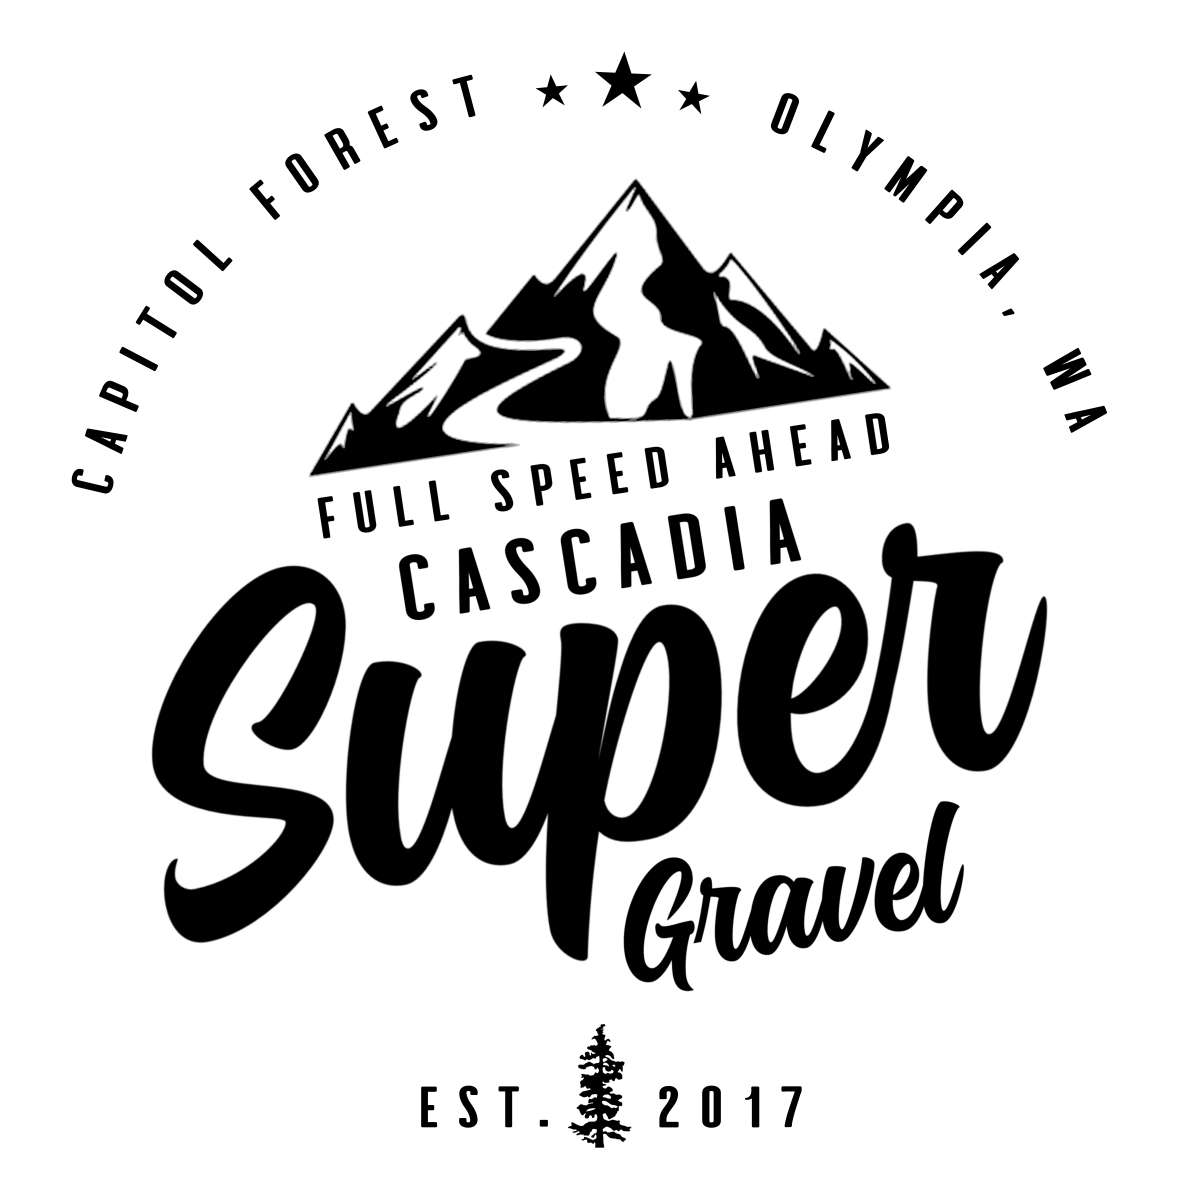 Cascadia Super Gravel